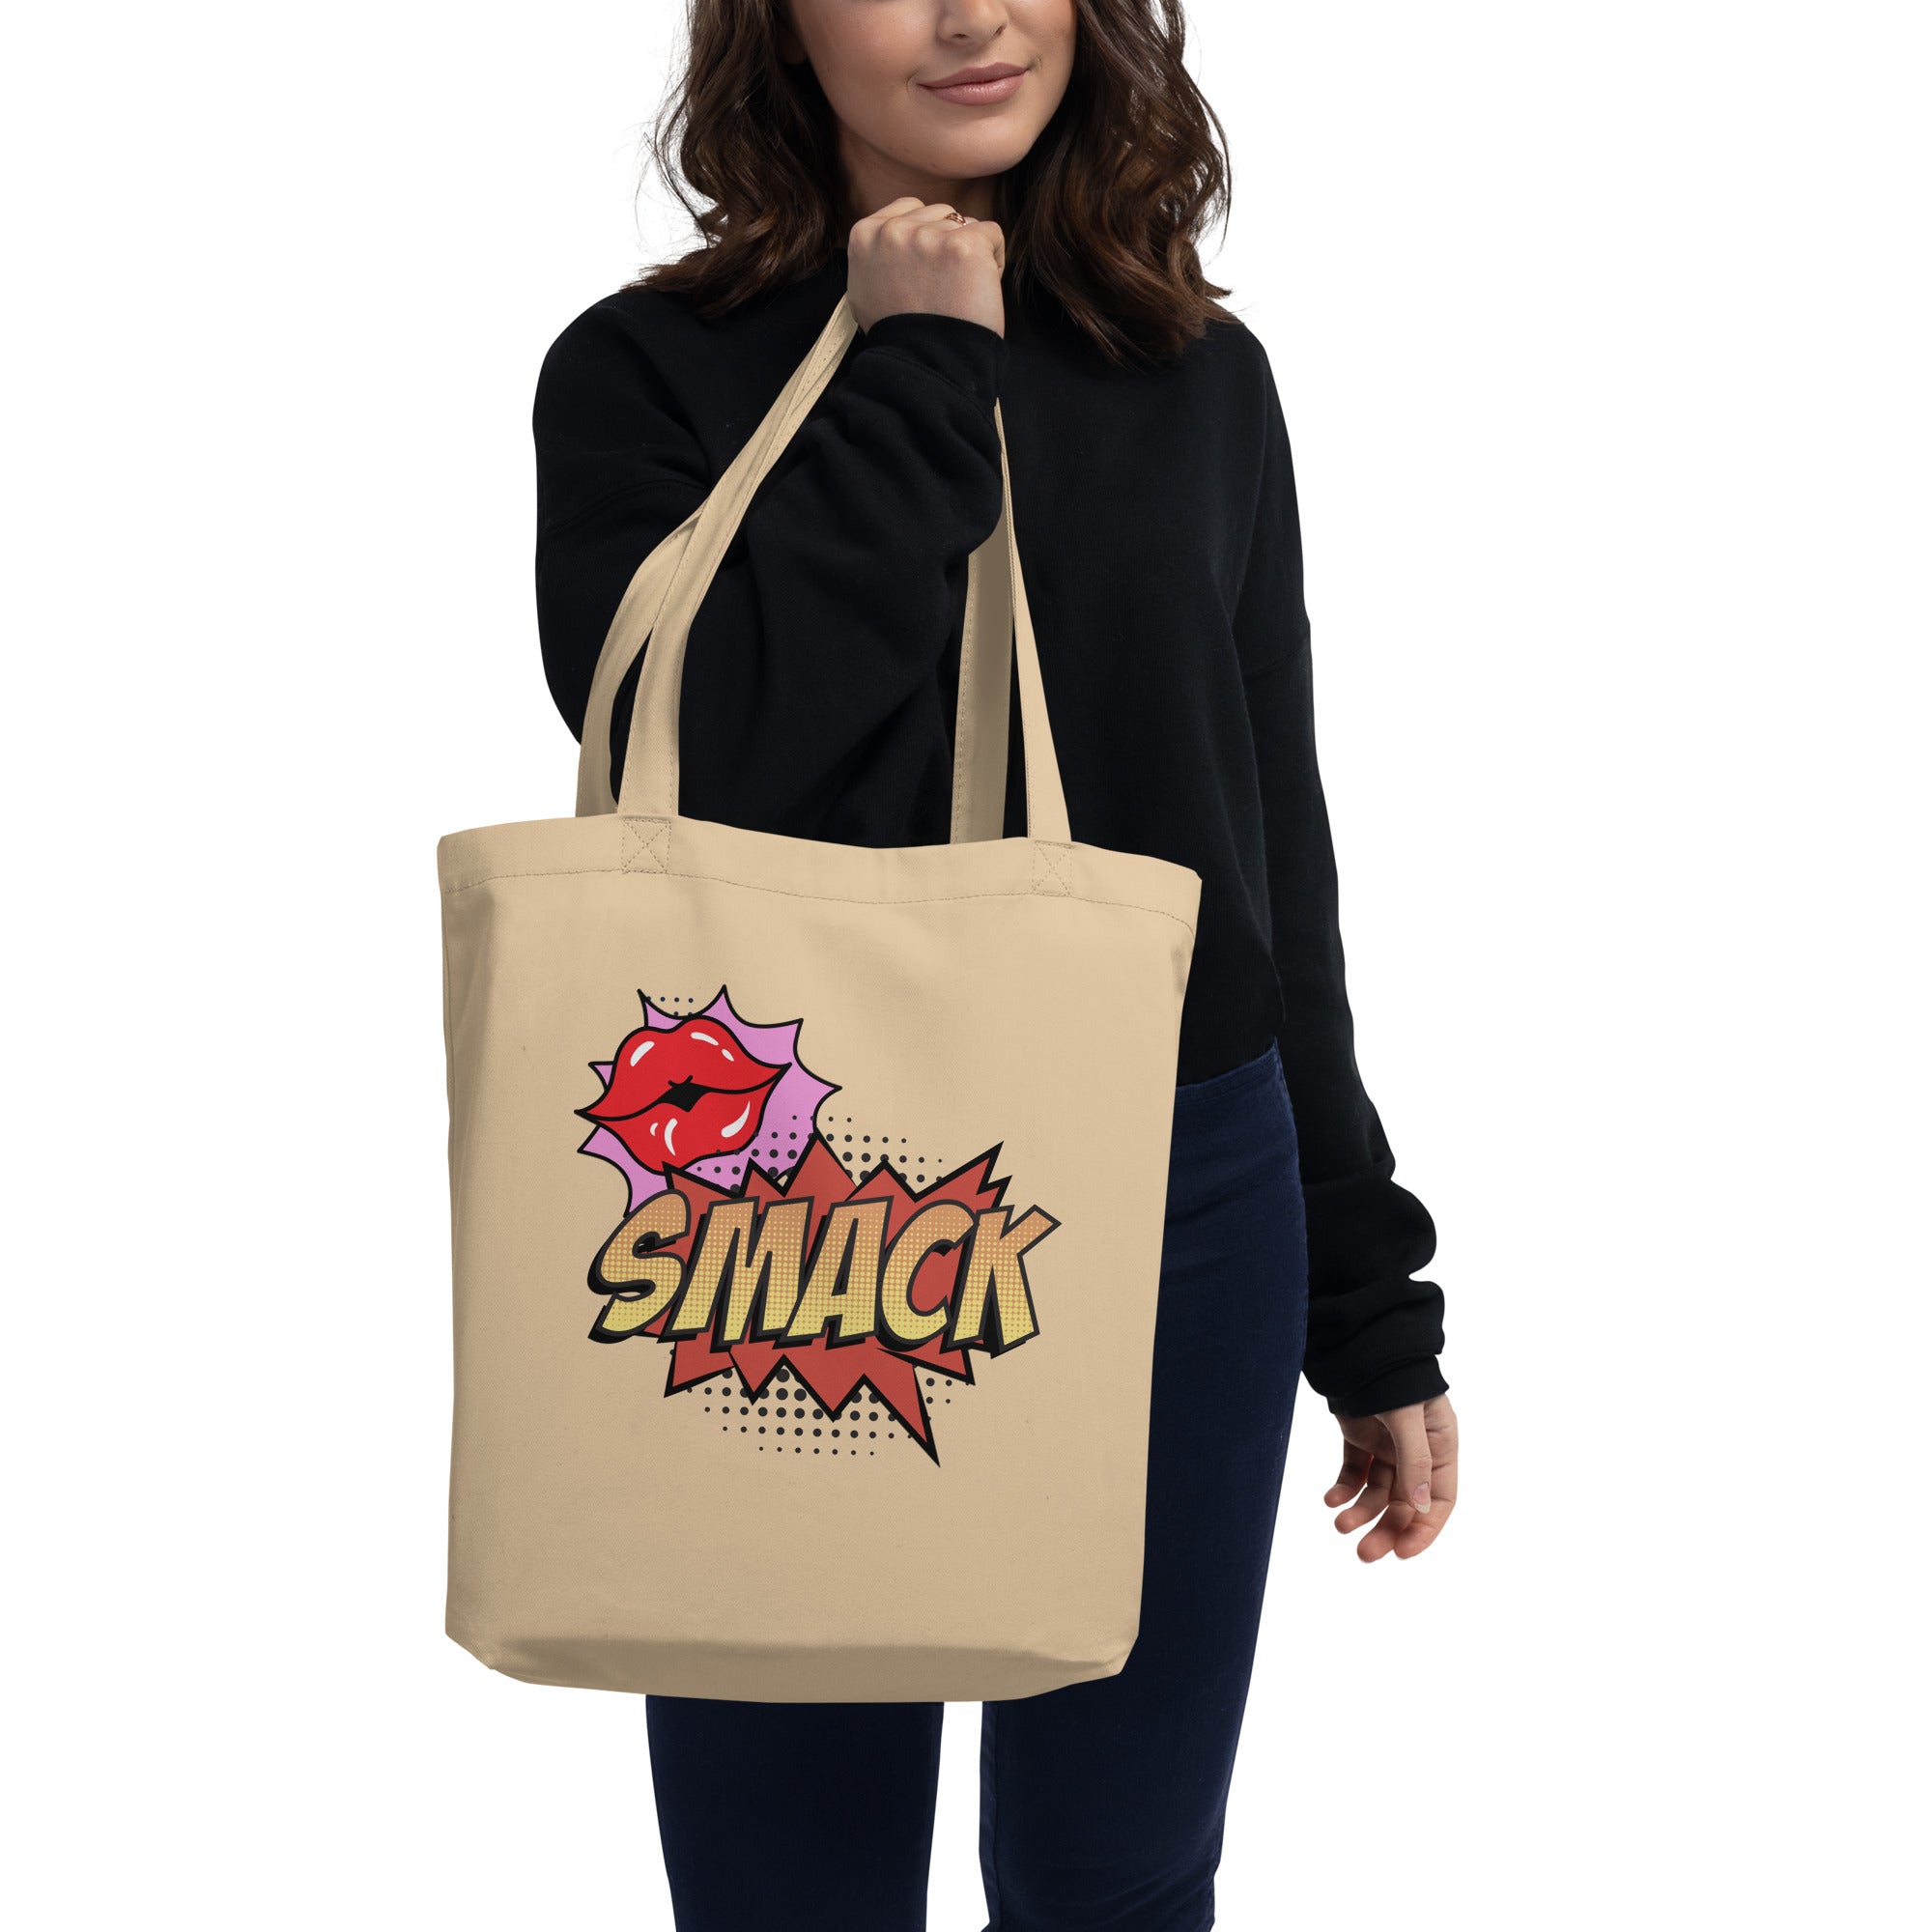 Eco Tote Bag, Smack Kiss Back, School Bag, Gift, Weekend, Travel